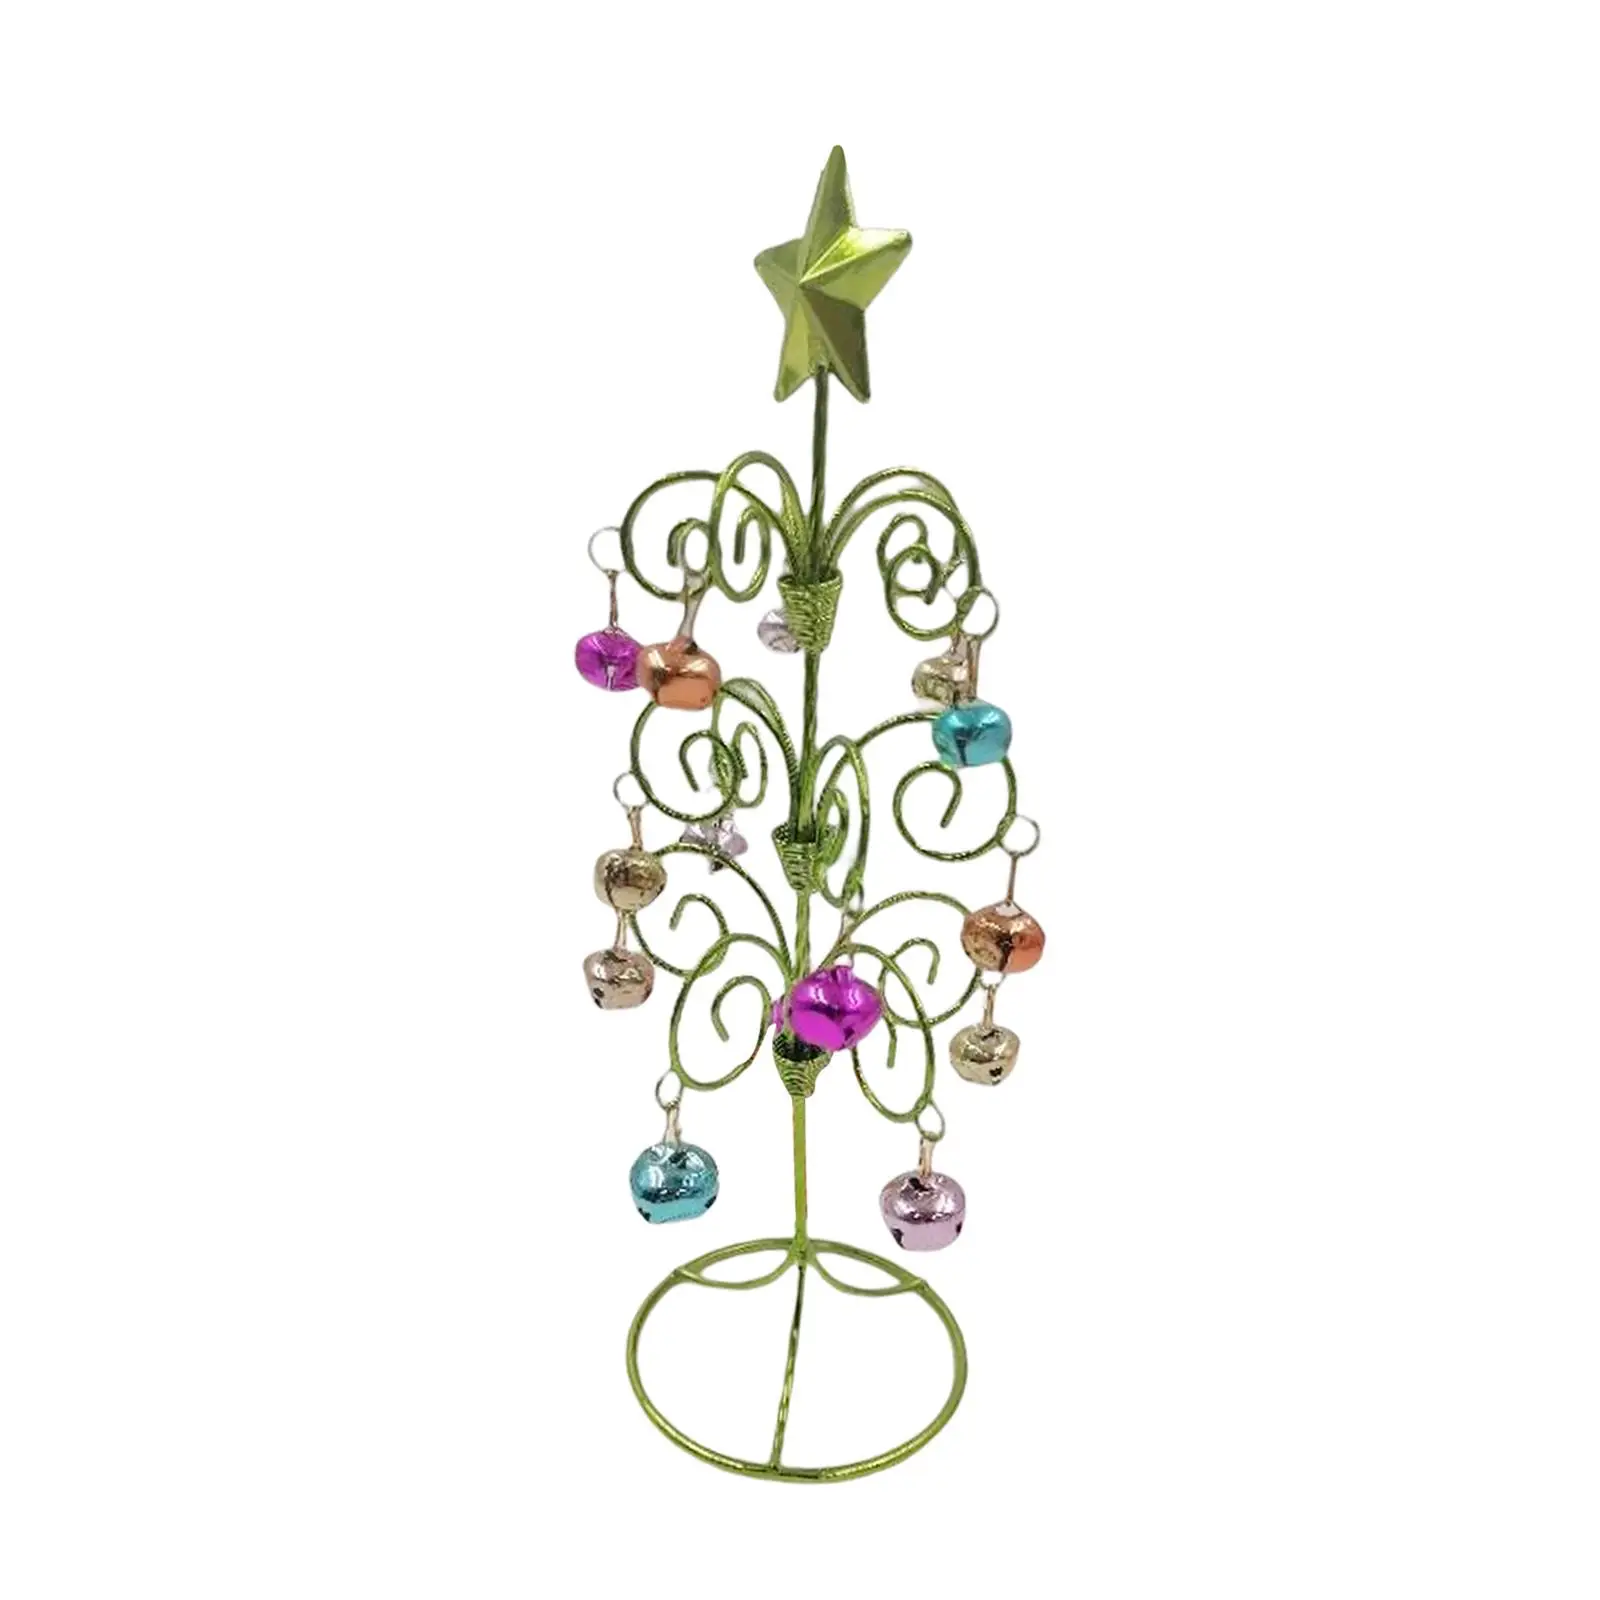 Creative Christmas Tree Desktop Art Ornament for Home Office Outdoor Decor Birthday Gift